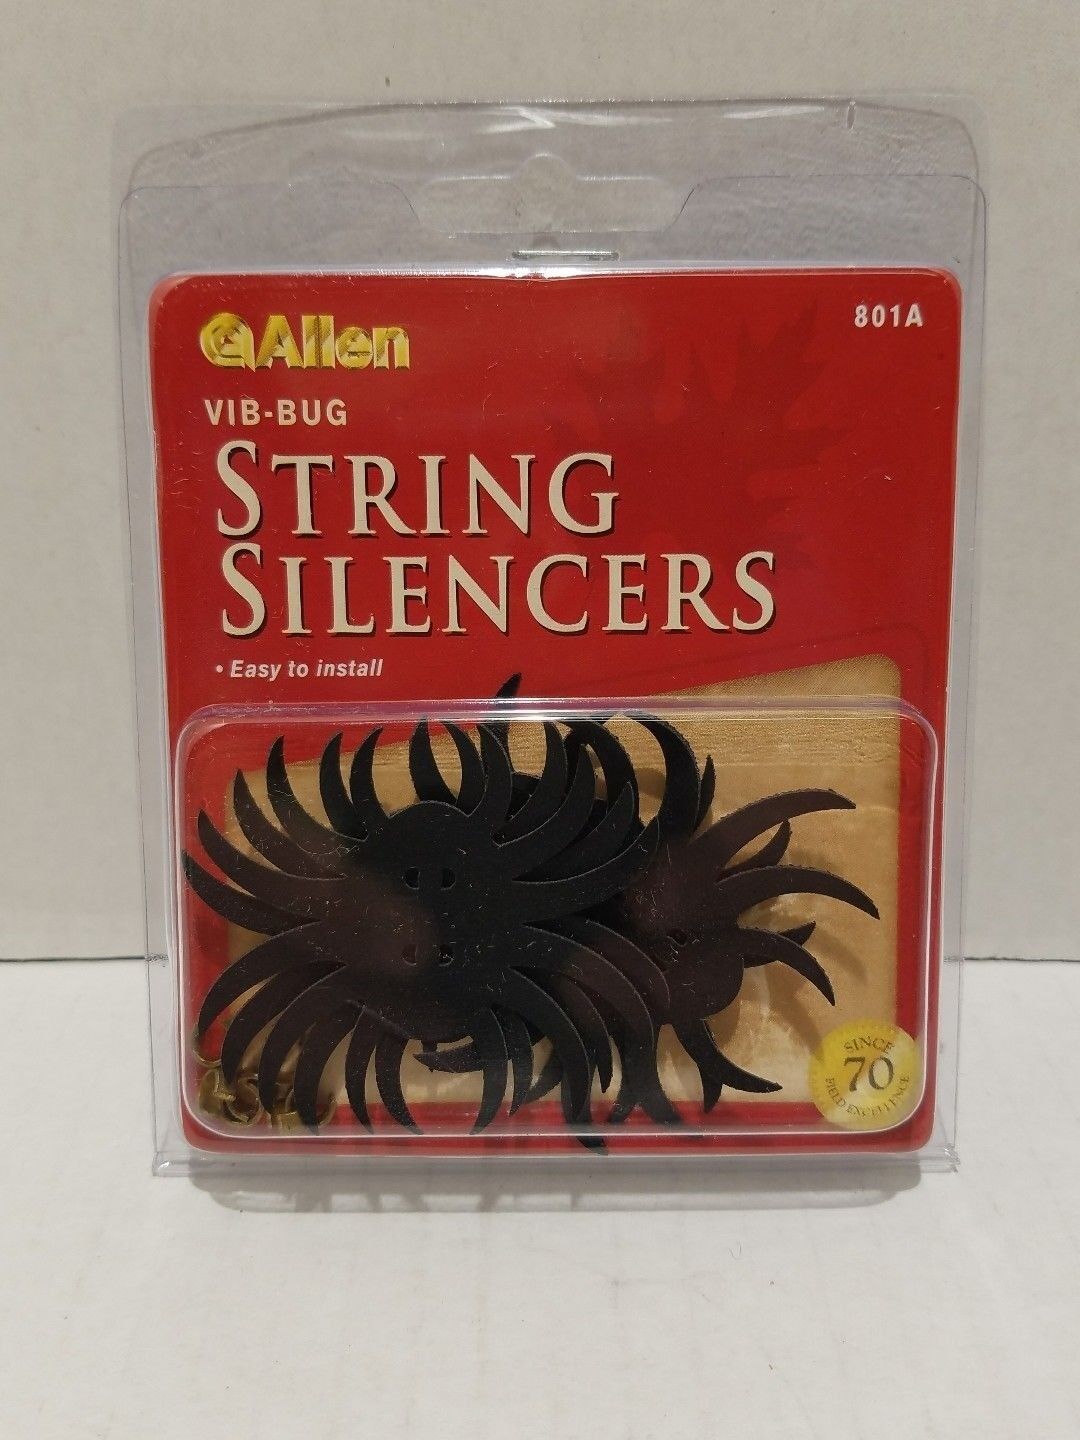 Allen VIB-BUG String Silencers #801A - Lot of 7 Allen 801A